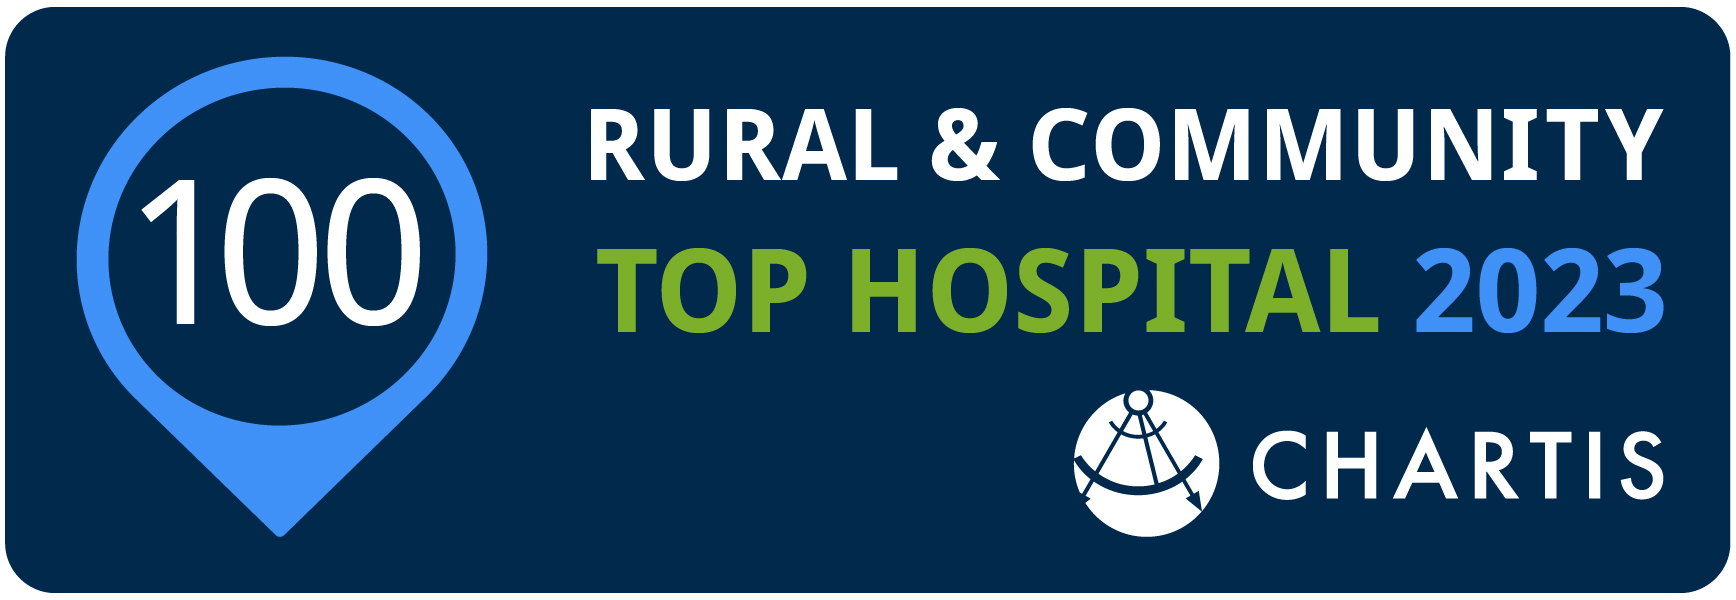 Rural & Community Top Hospital logo